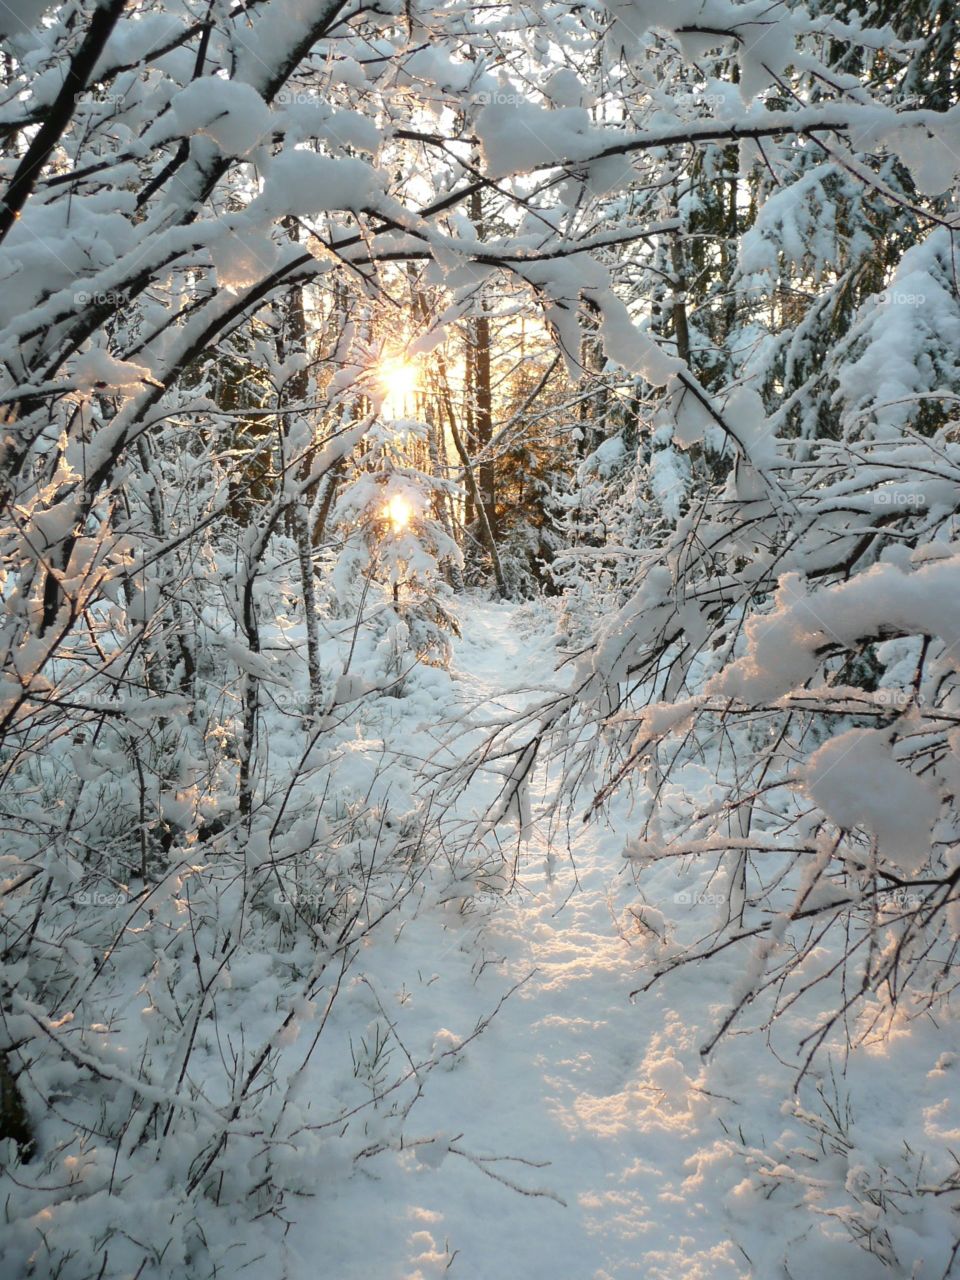 Sunlight through snowy tree branches